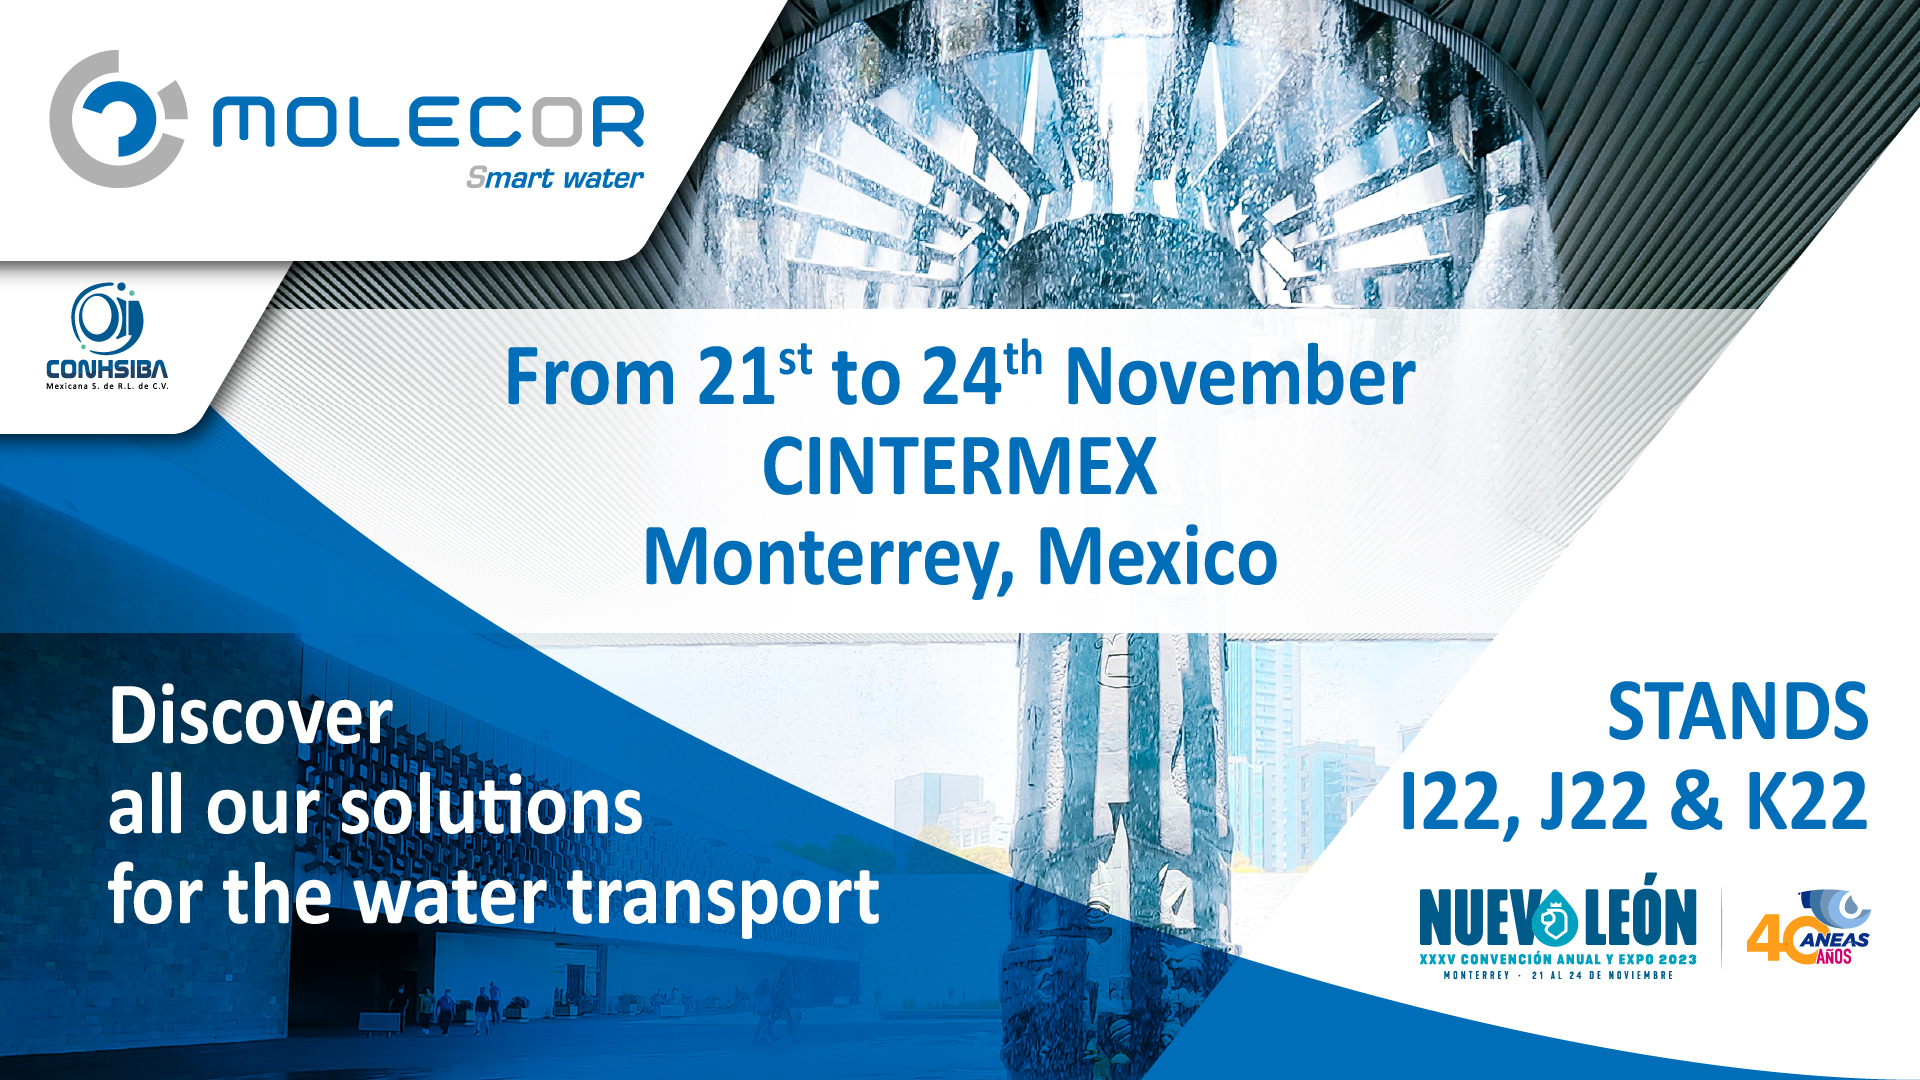 Molecor participates at XXXV Annual Convention and Expo ANEAS in Monterrey, Mexico